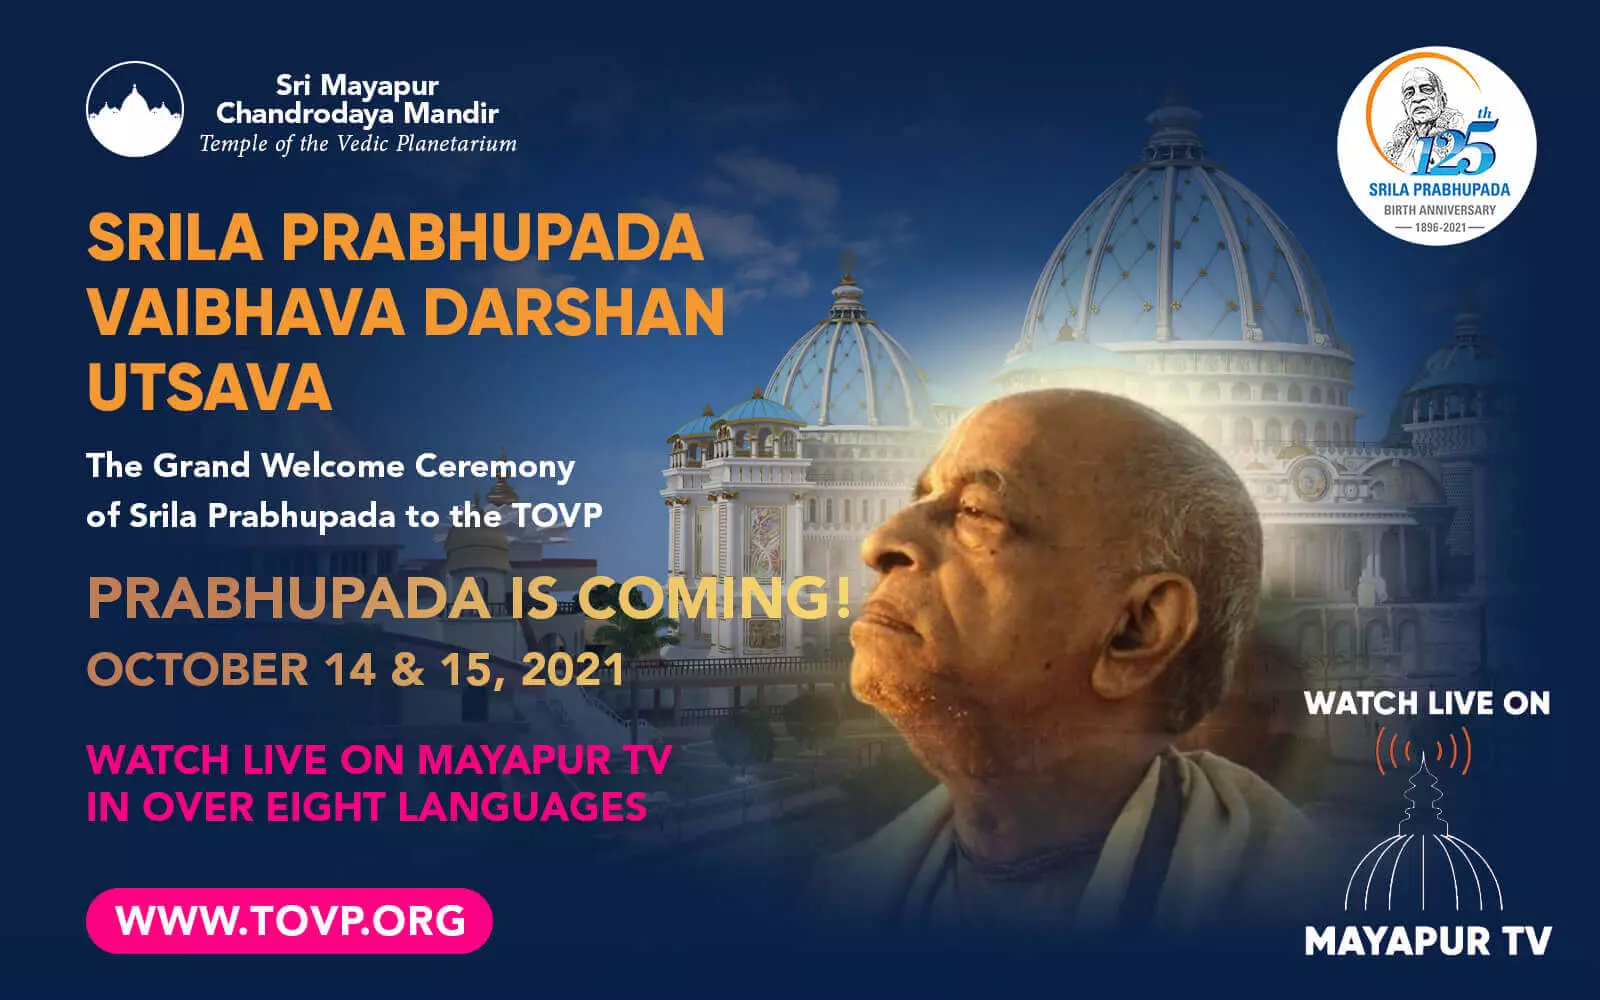 PRABHUPADA ARRIVA AL TOVP! Guarda in diretta su Mayapur TV, 14 e 15 ottobre